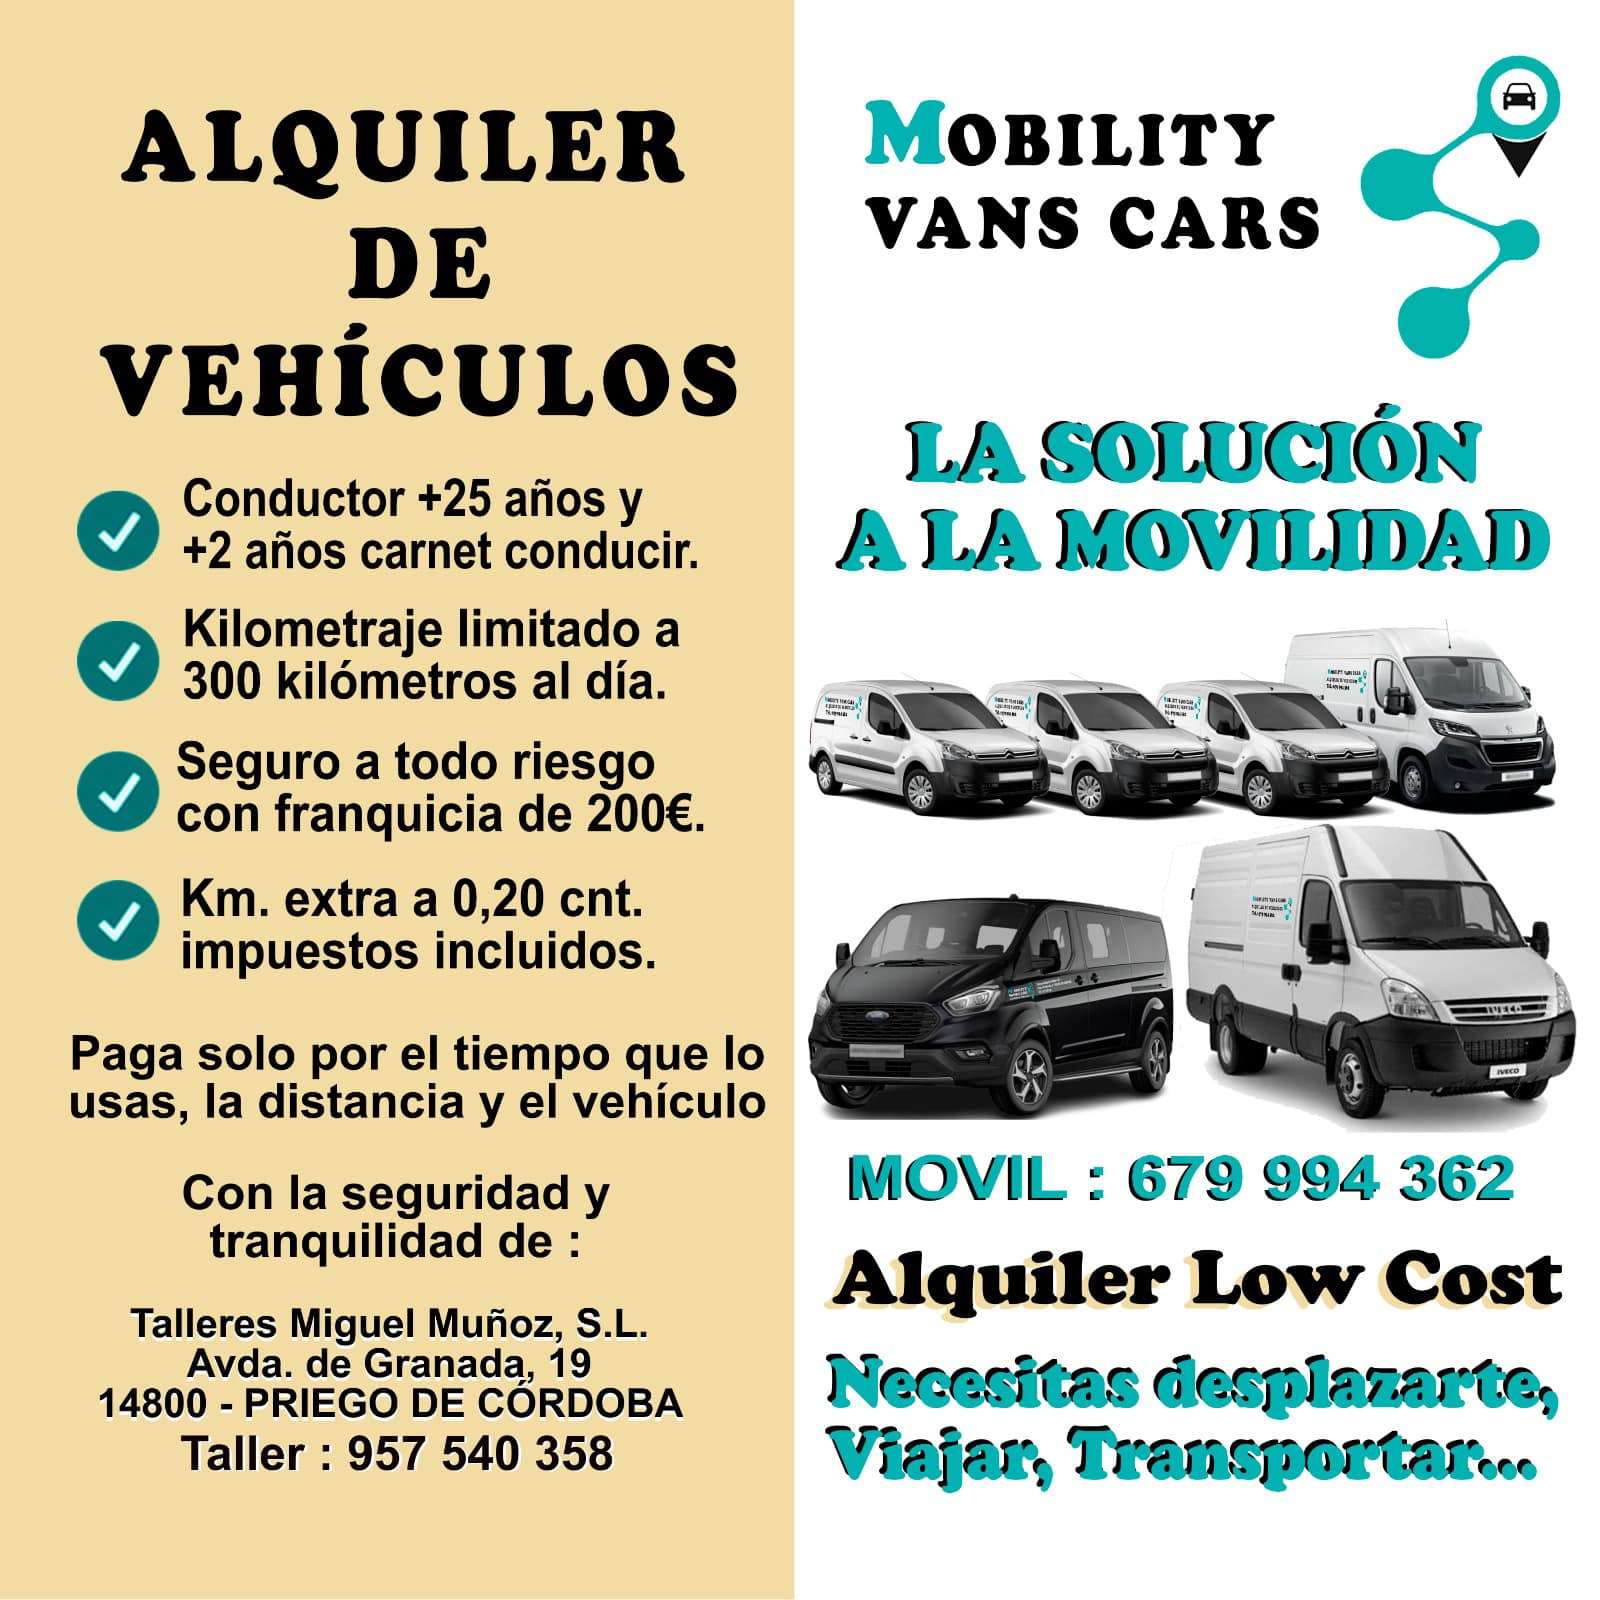 Mobility Vans Cars